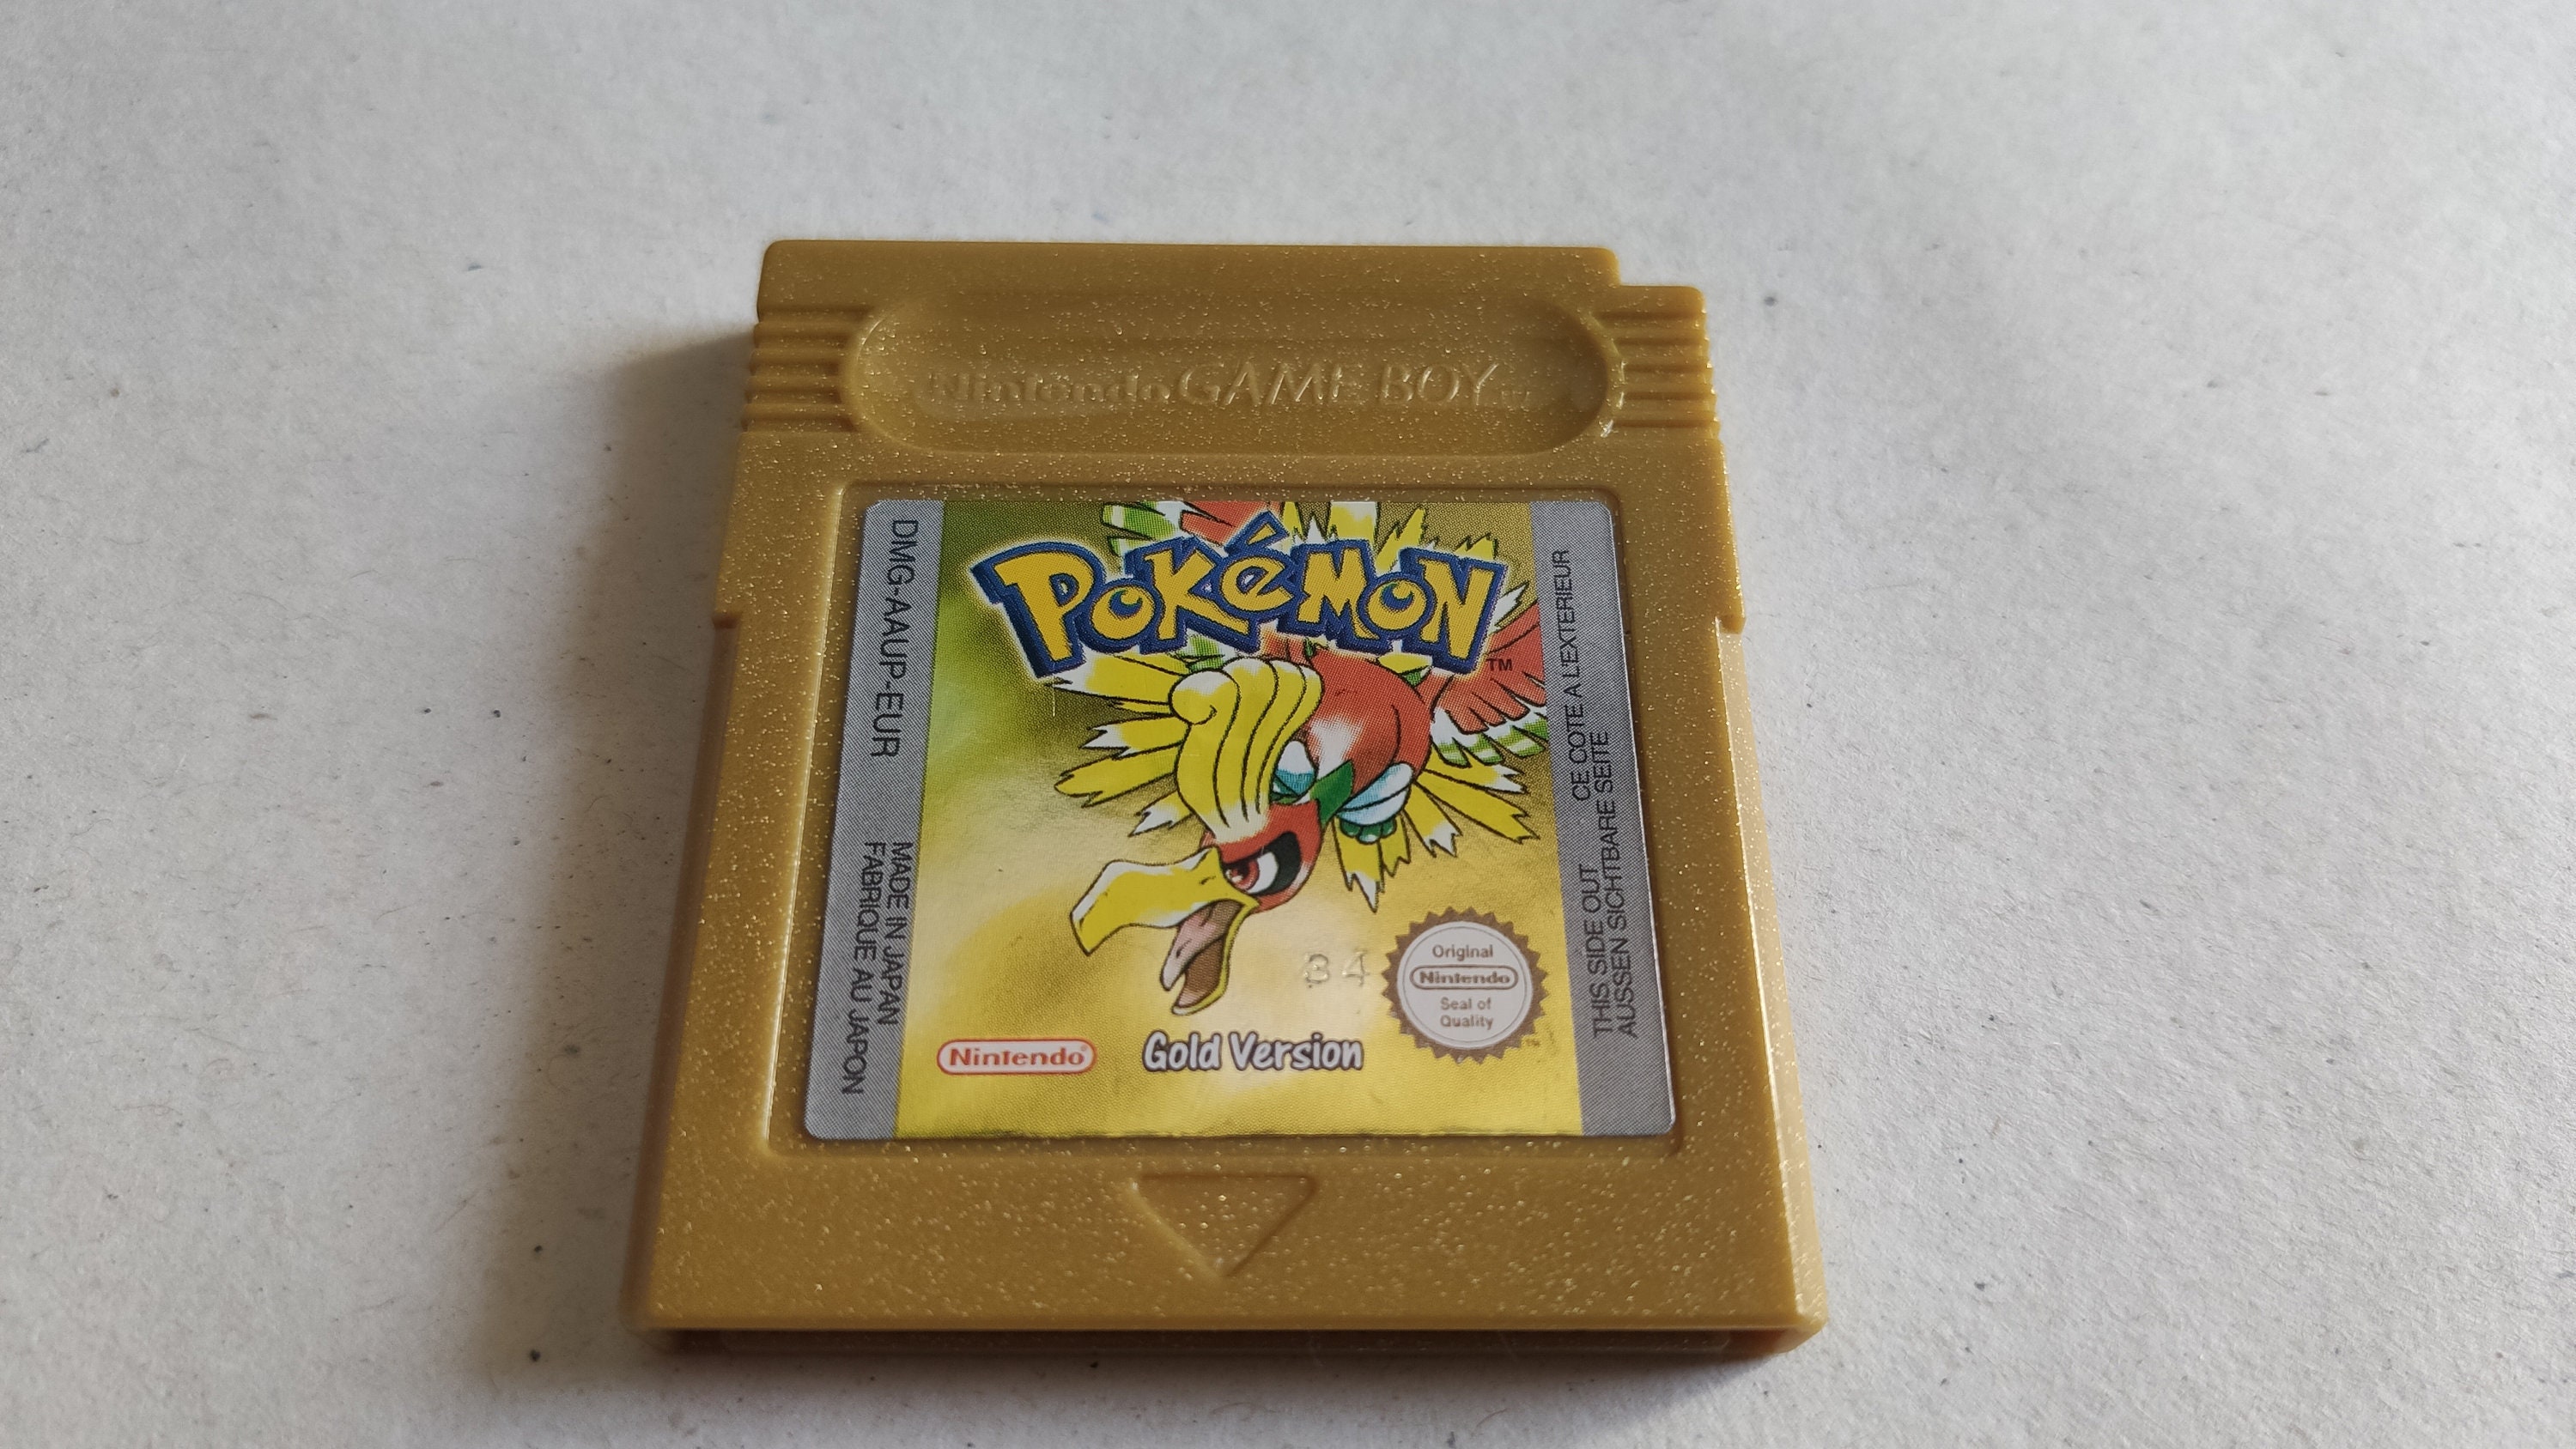 Nintendo Gameboy Color Pokemon Gold Version game Authentic Cartridge  Vintage 